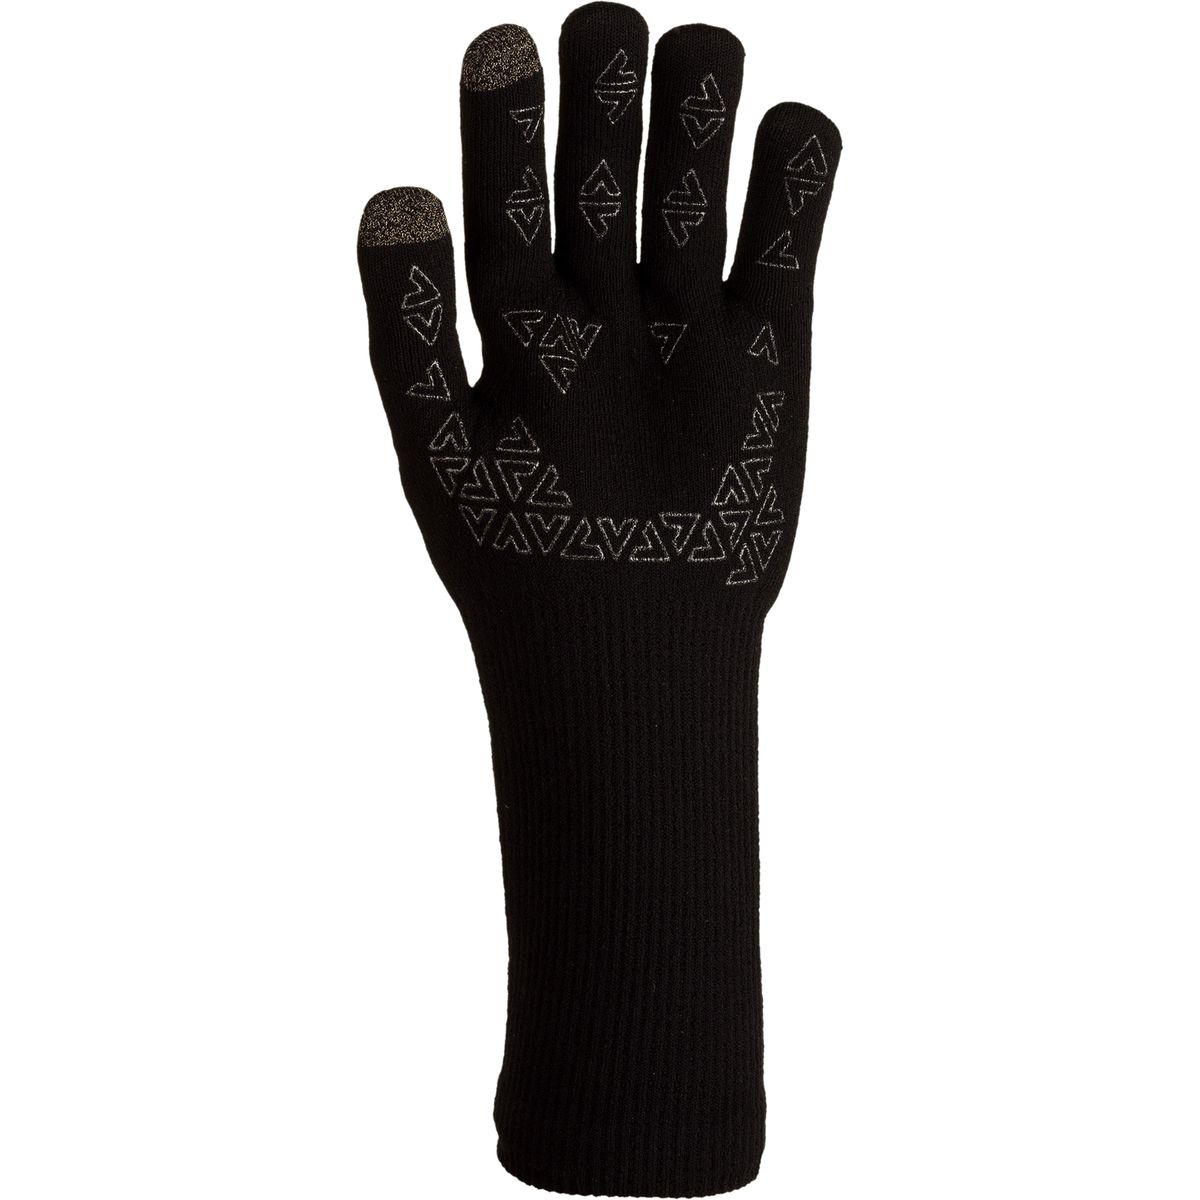 SealSkinz Ultra Grip Gauntlet Glove - Men's - Accessories